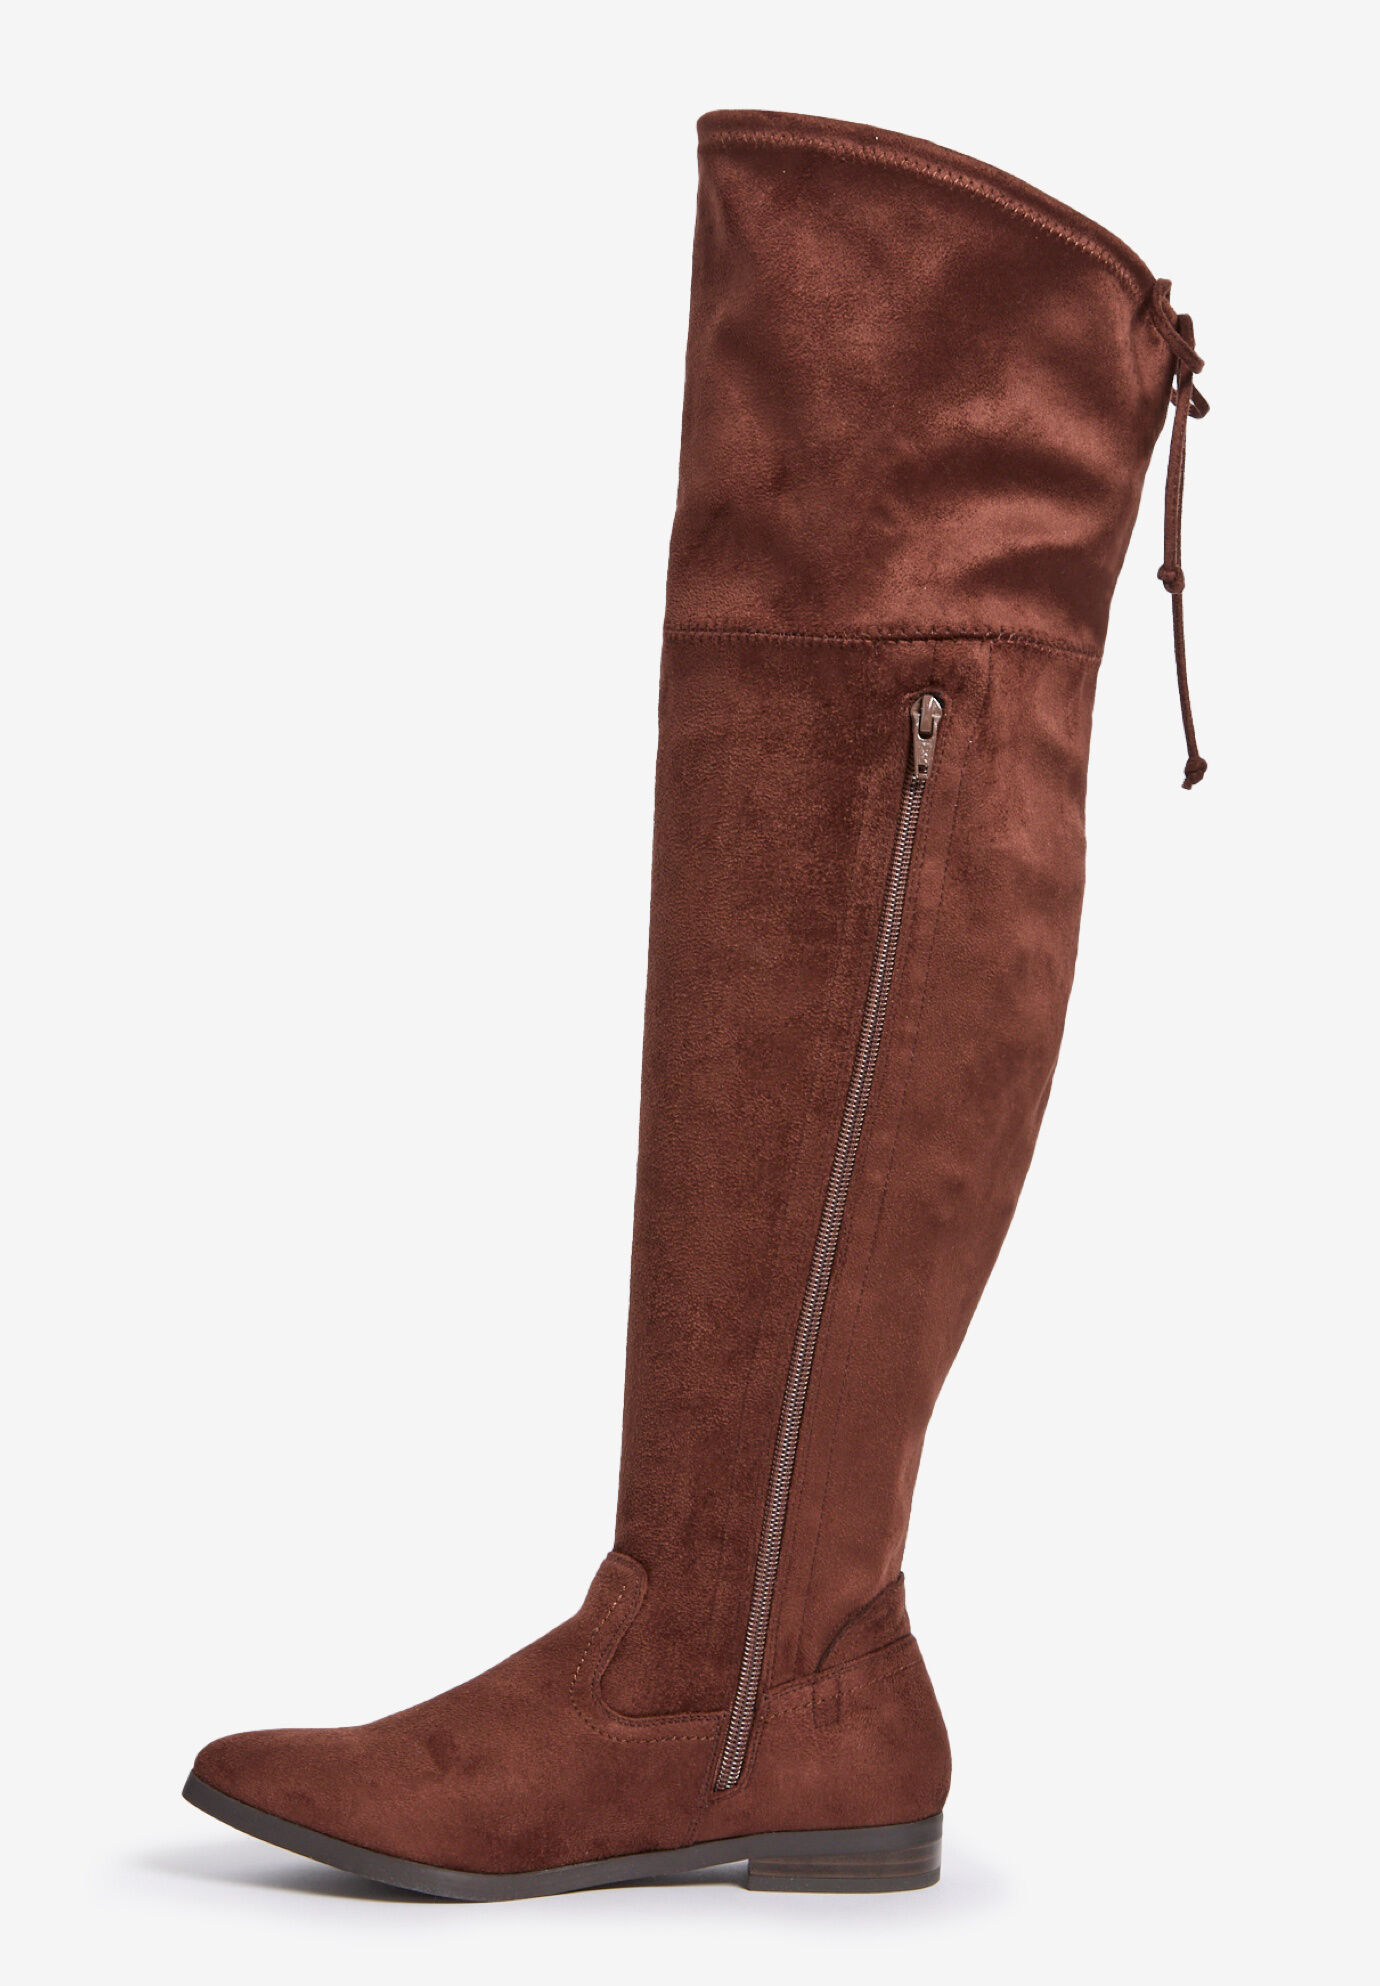 burgundy knee high boots wide calf